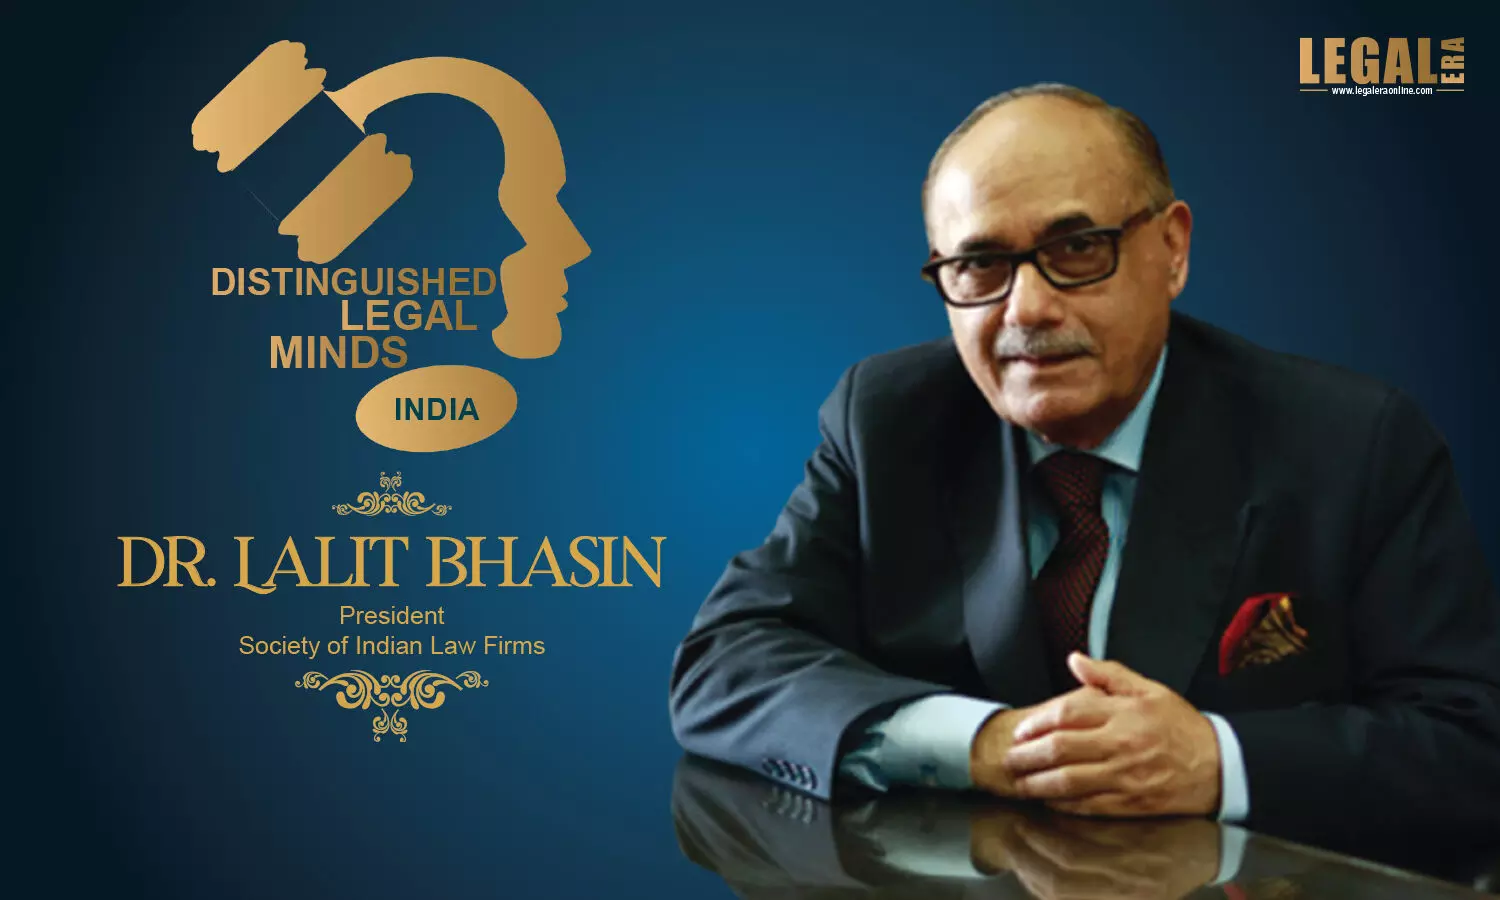 Dr. Lalit Bhasin